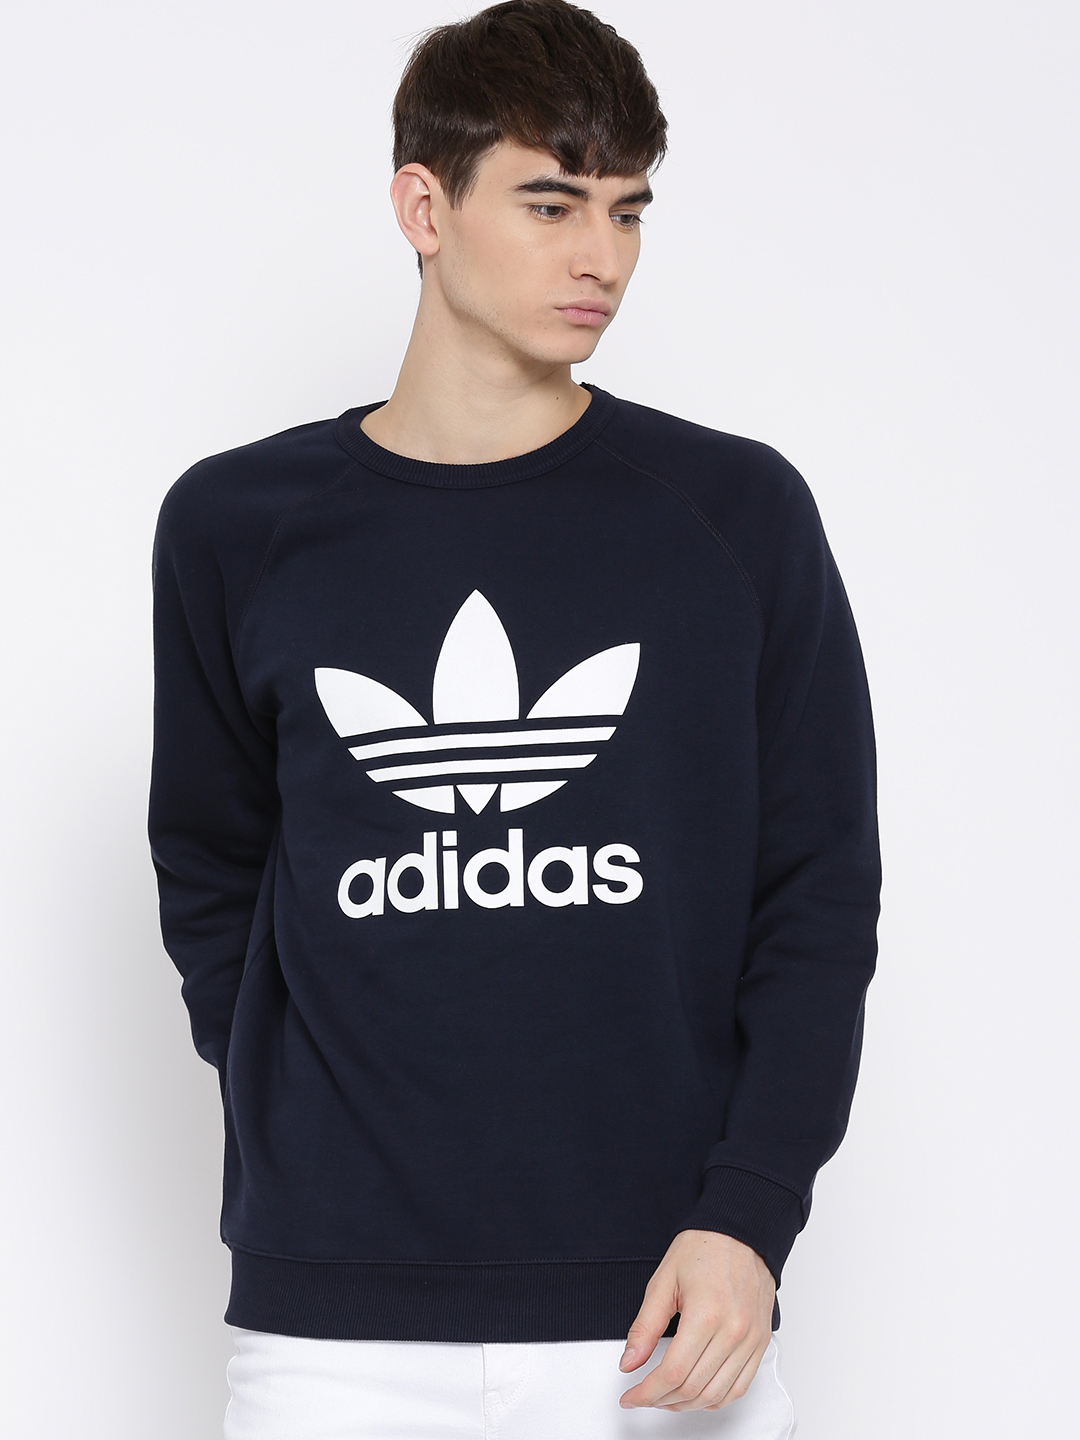 Adidas Originals Navy Trefoil Crew Printed Sweatshirt